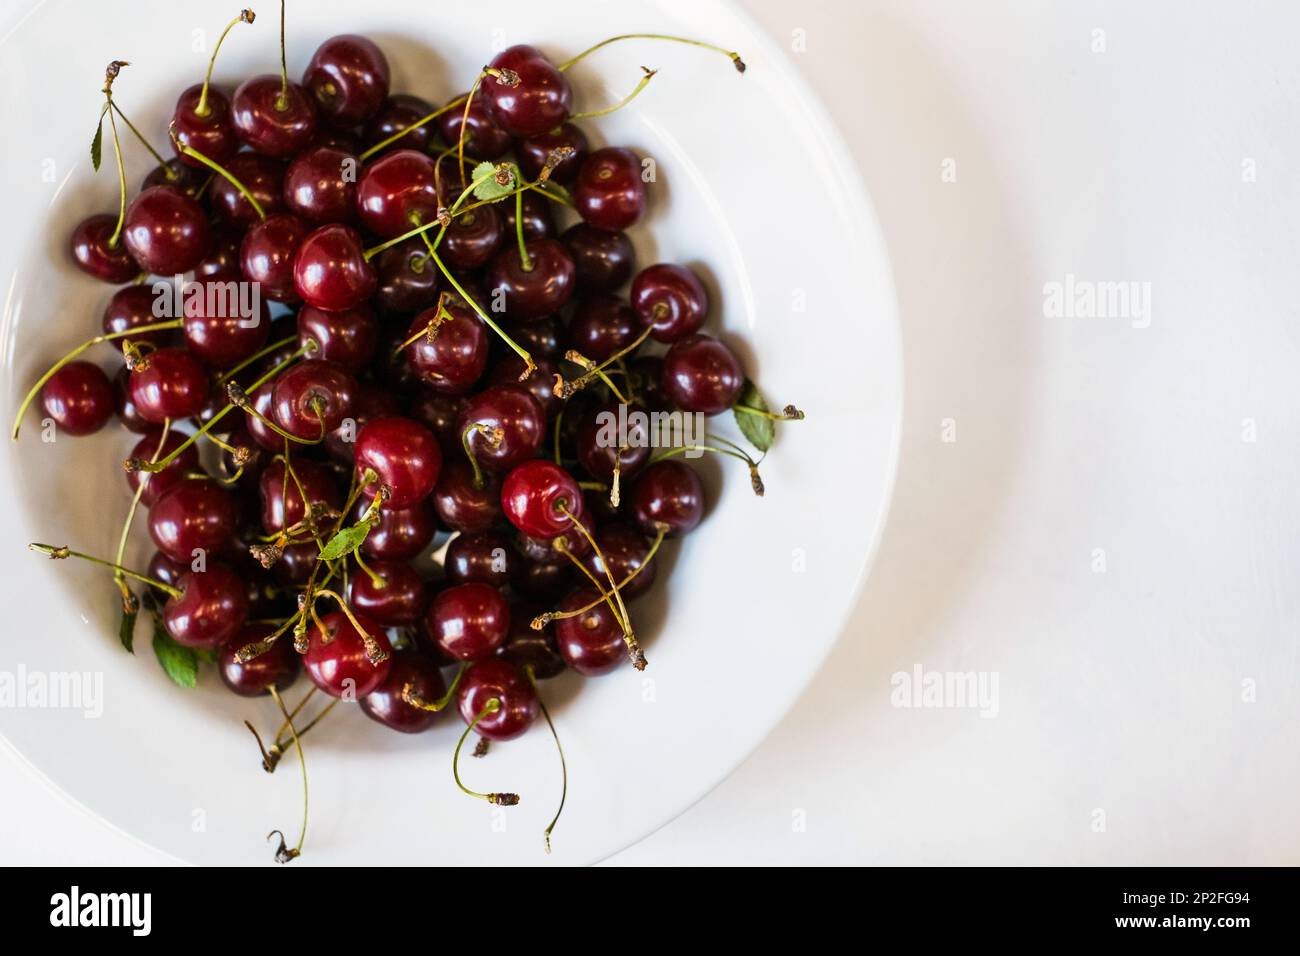 Diet healthy food vegetarian berry summer concept Stock Photo